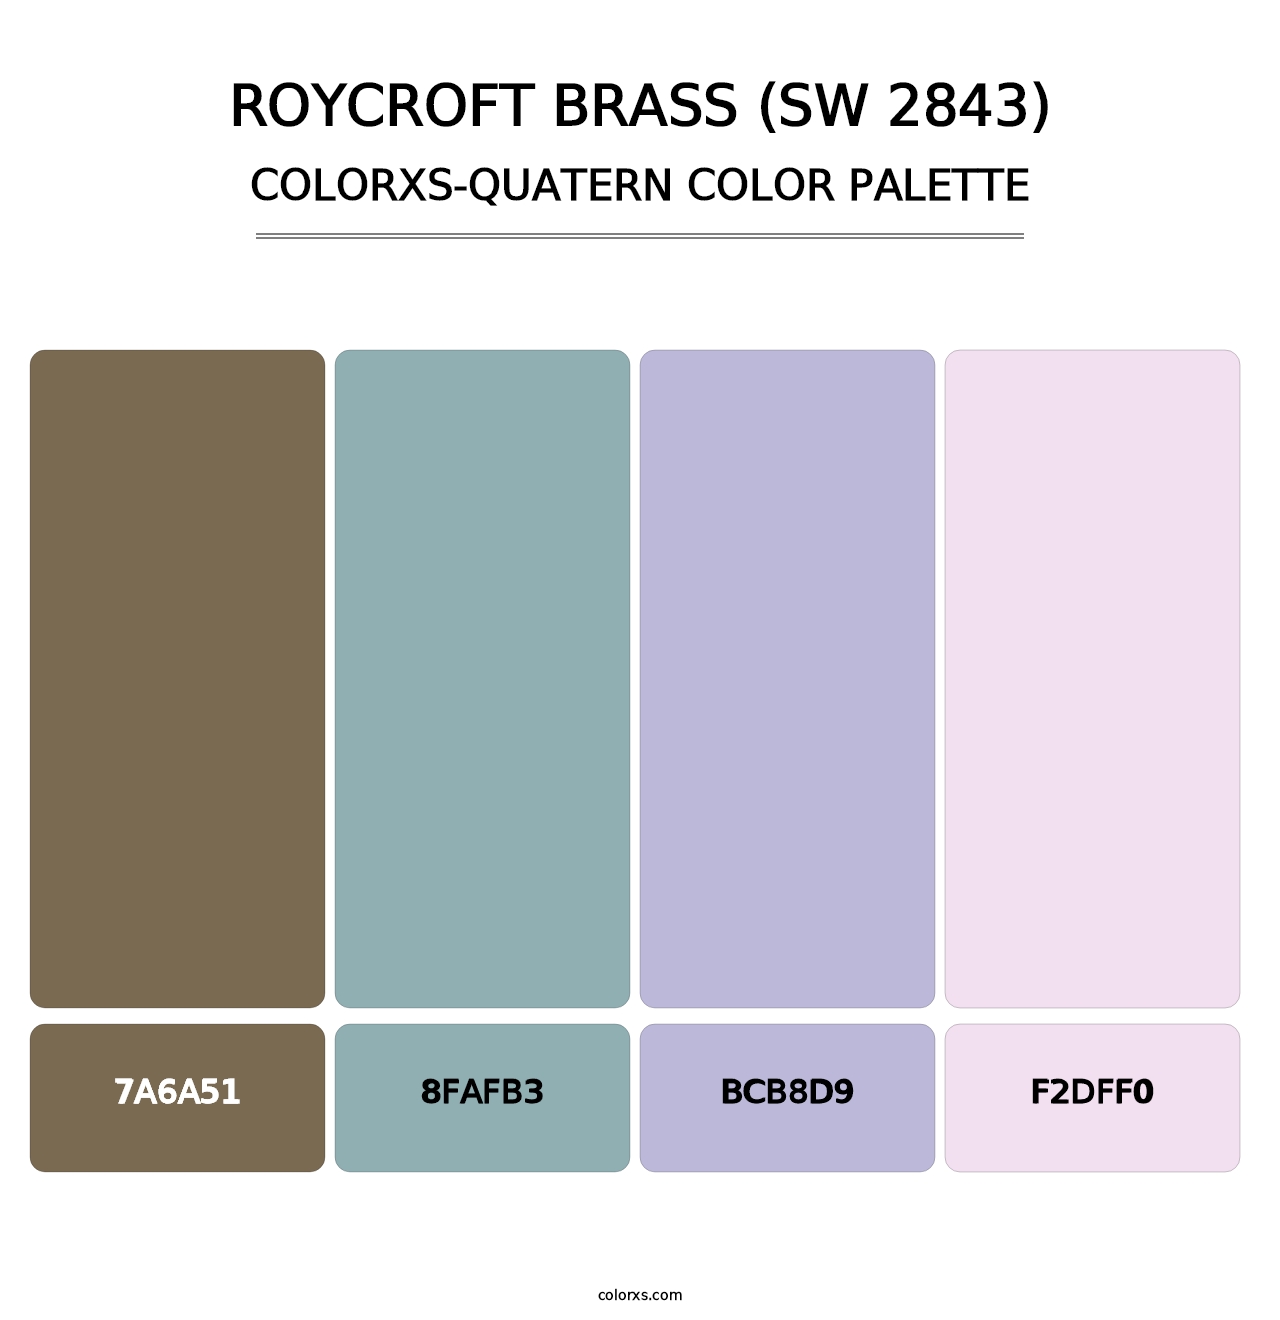 Roycroft Brass (SW 2843) - Colorxs Quatern Palette